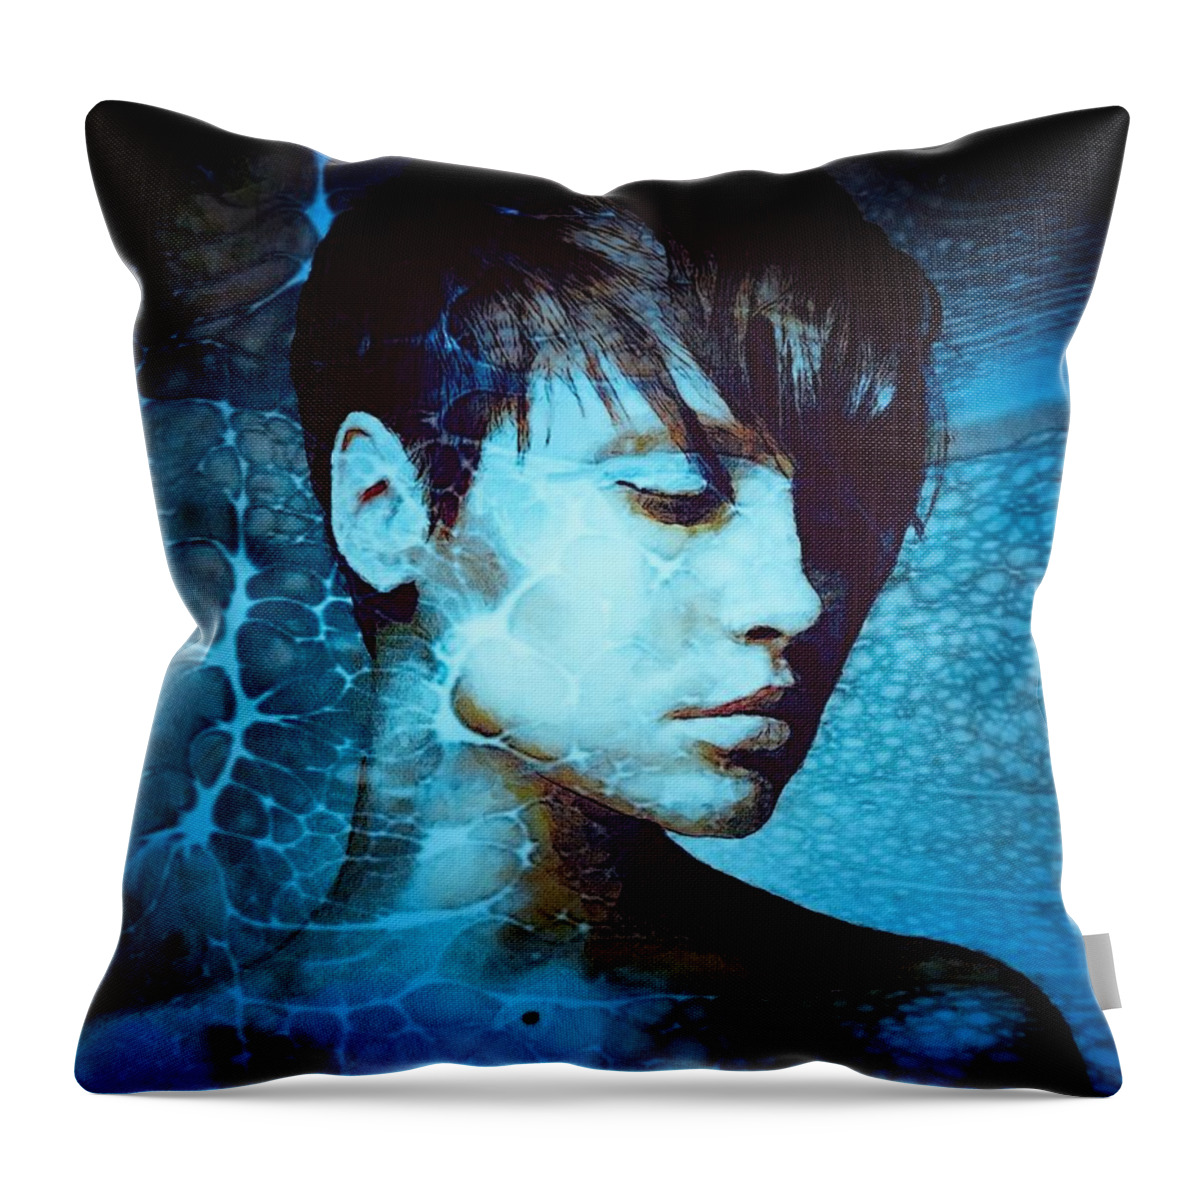 Portrait Throw Pillow featuring the digital art Touch of blues by Gun Legler